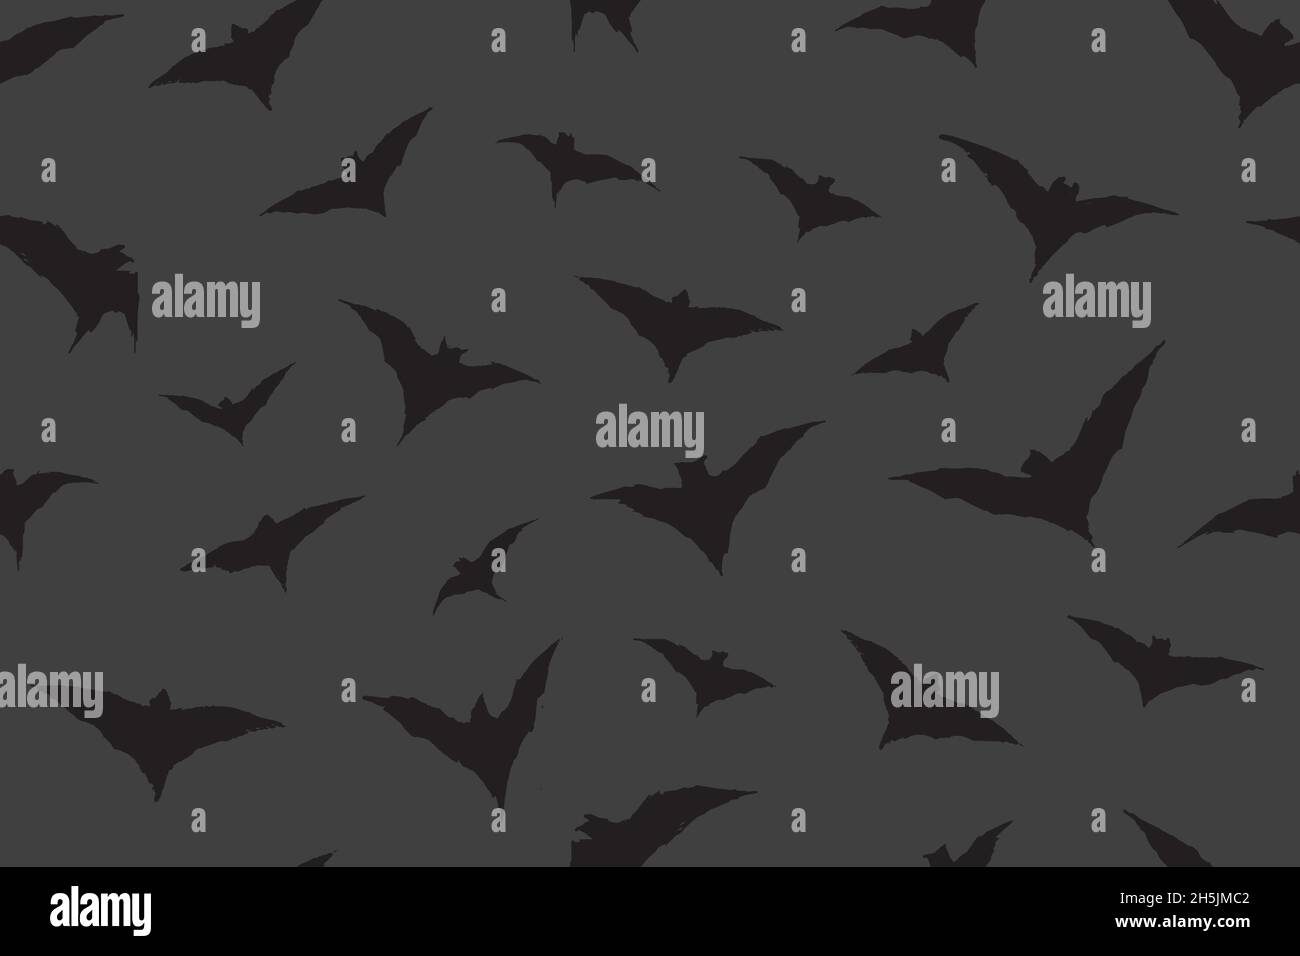 Bats flying silhouette seamless pattern. Digital Illustration Background. Stock Vector